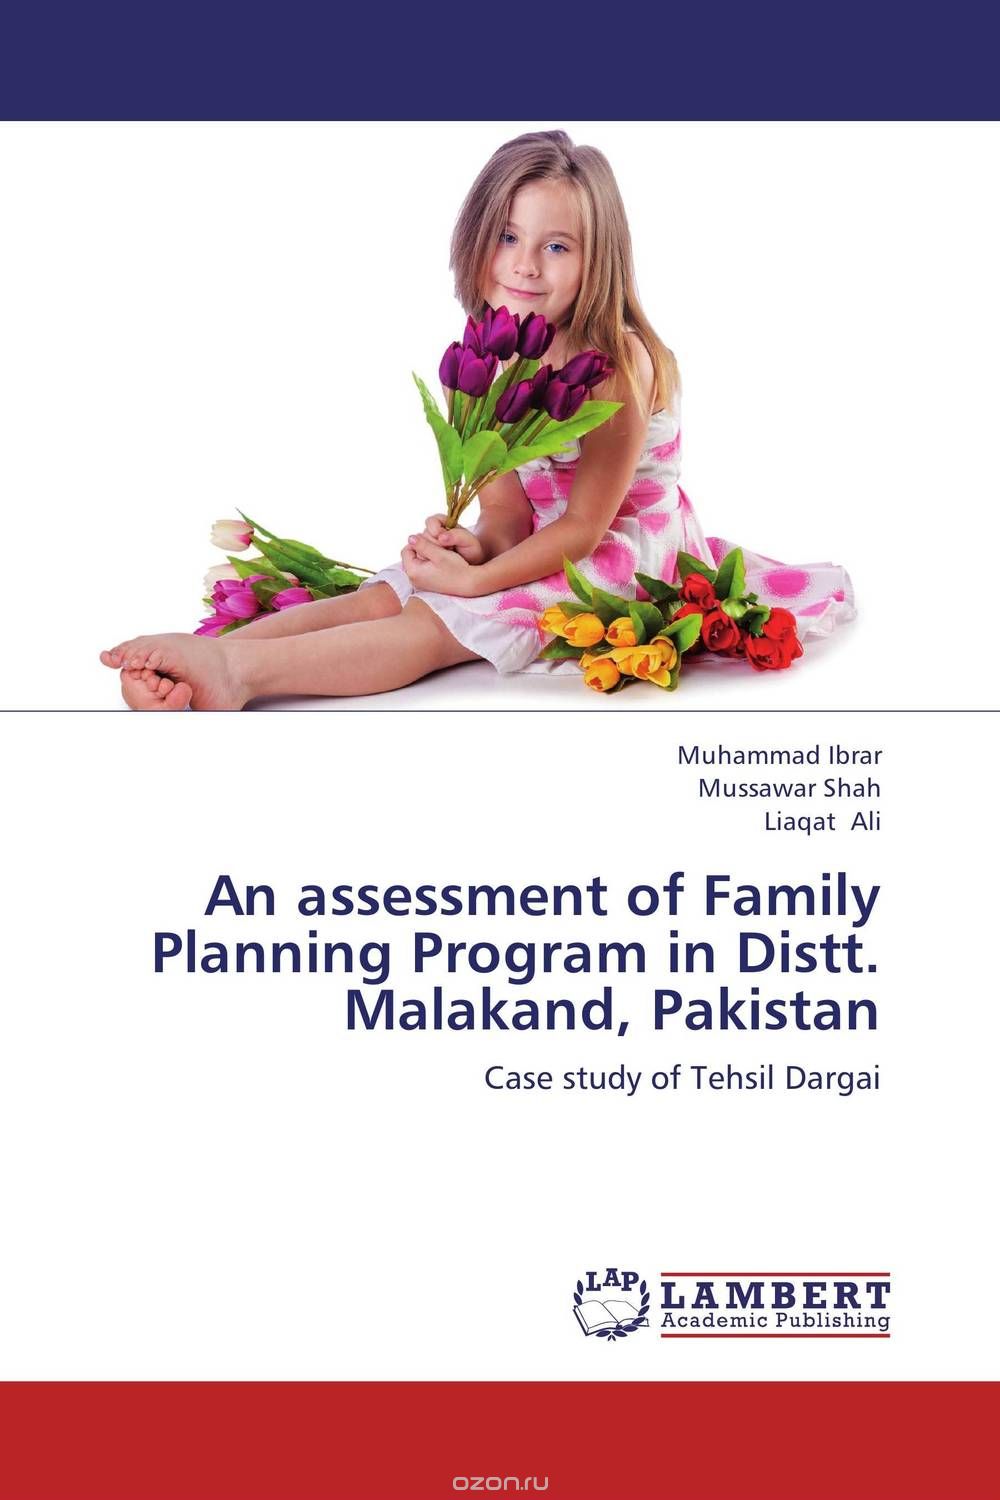 Скачать книгу "An assessment of Family Planning Program in Distt. Malakand, Pakistan"